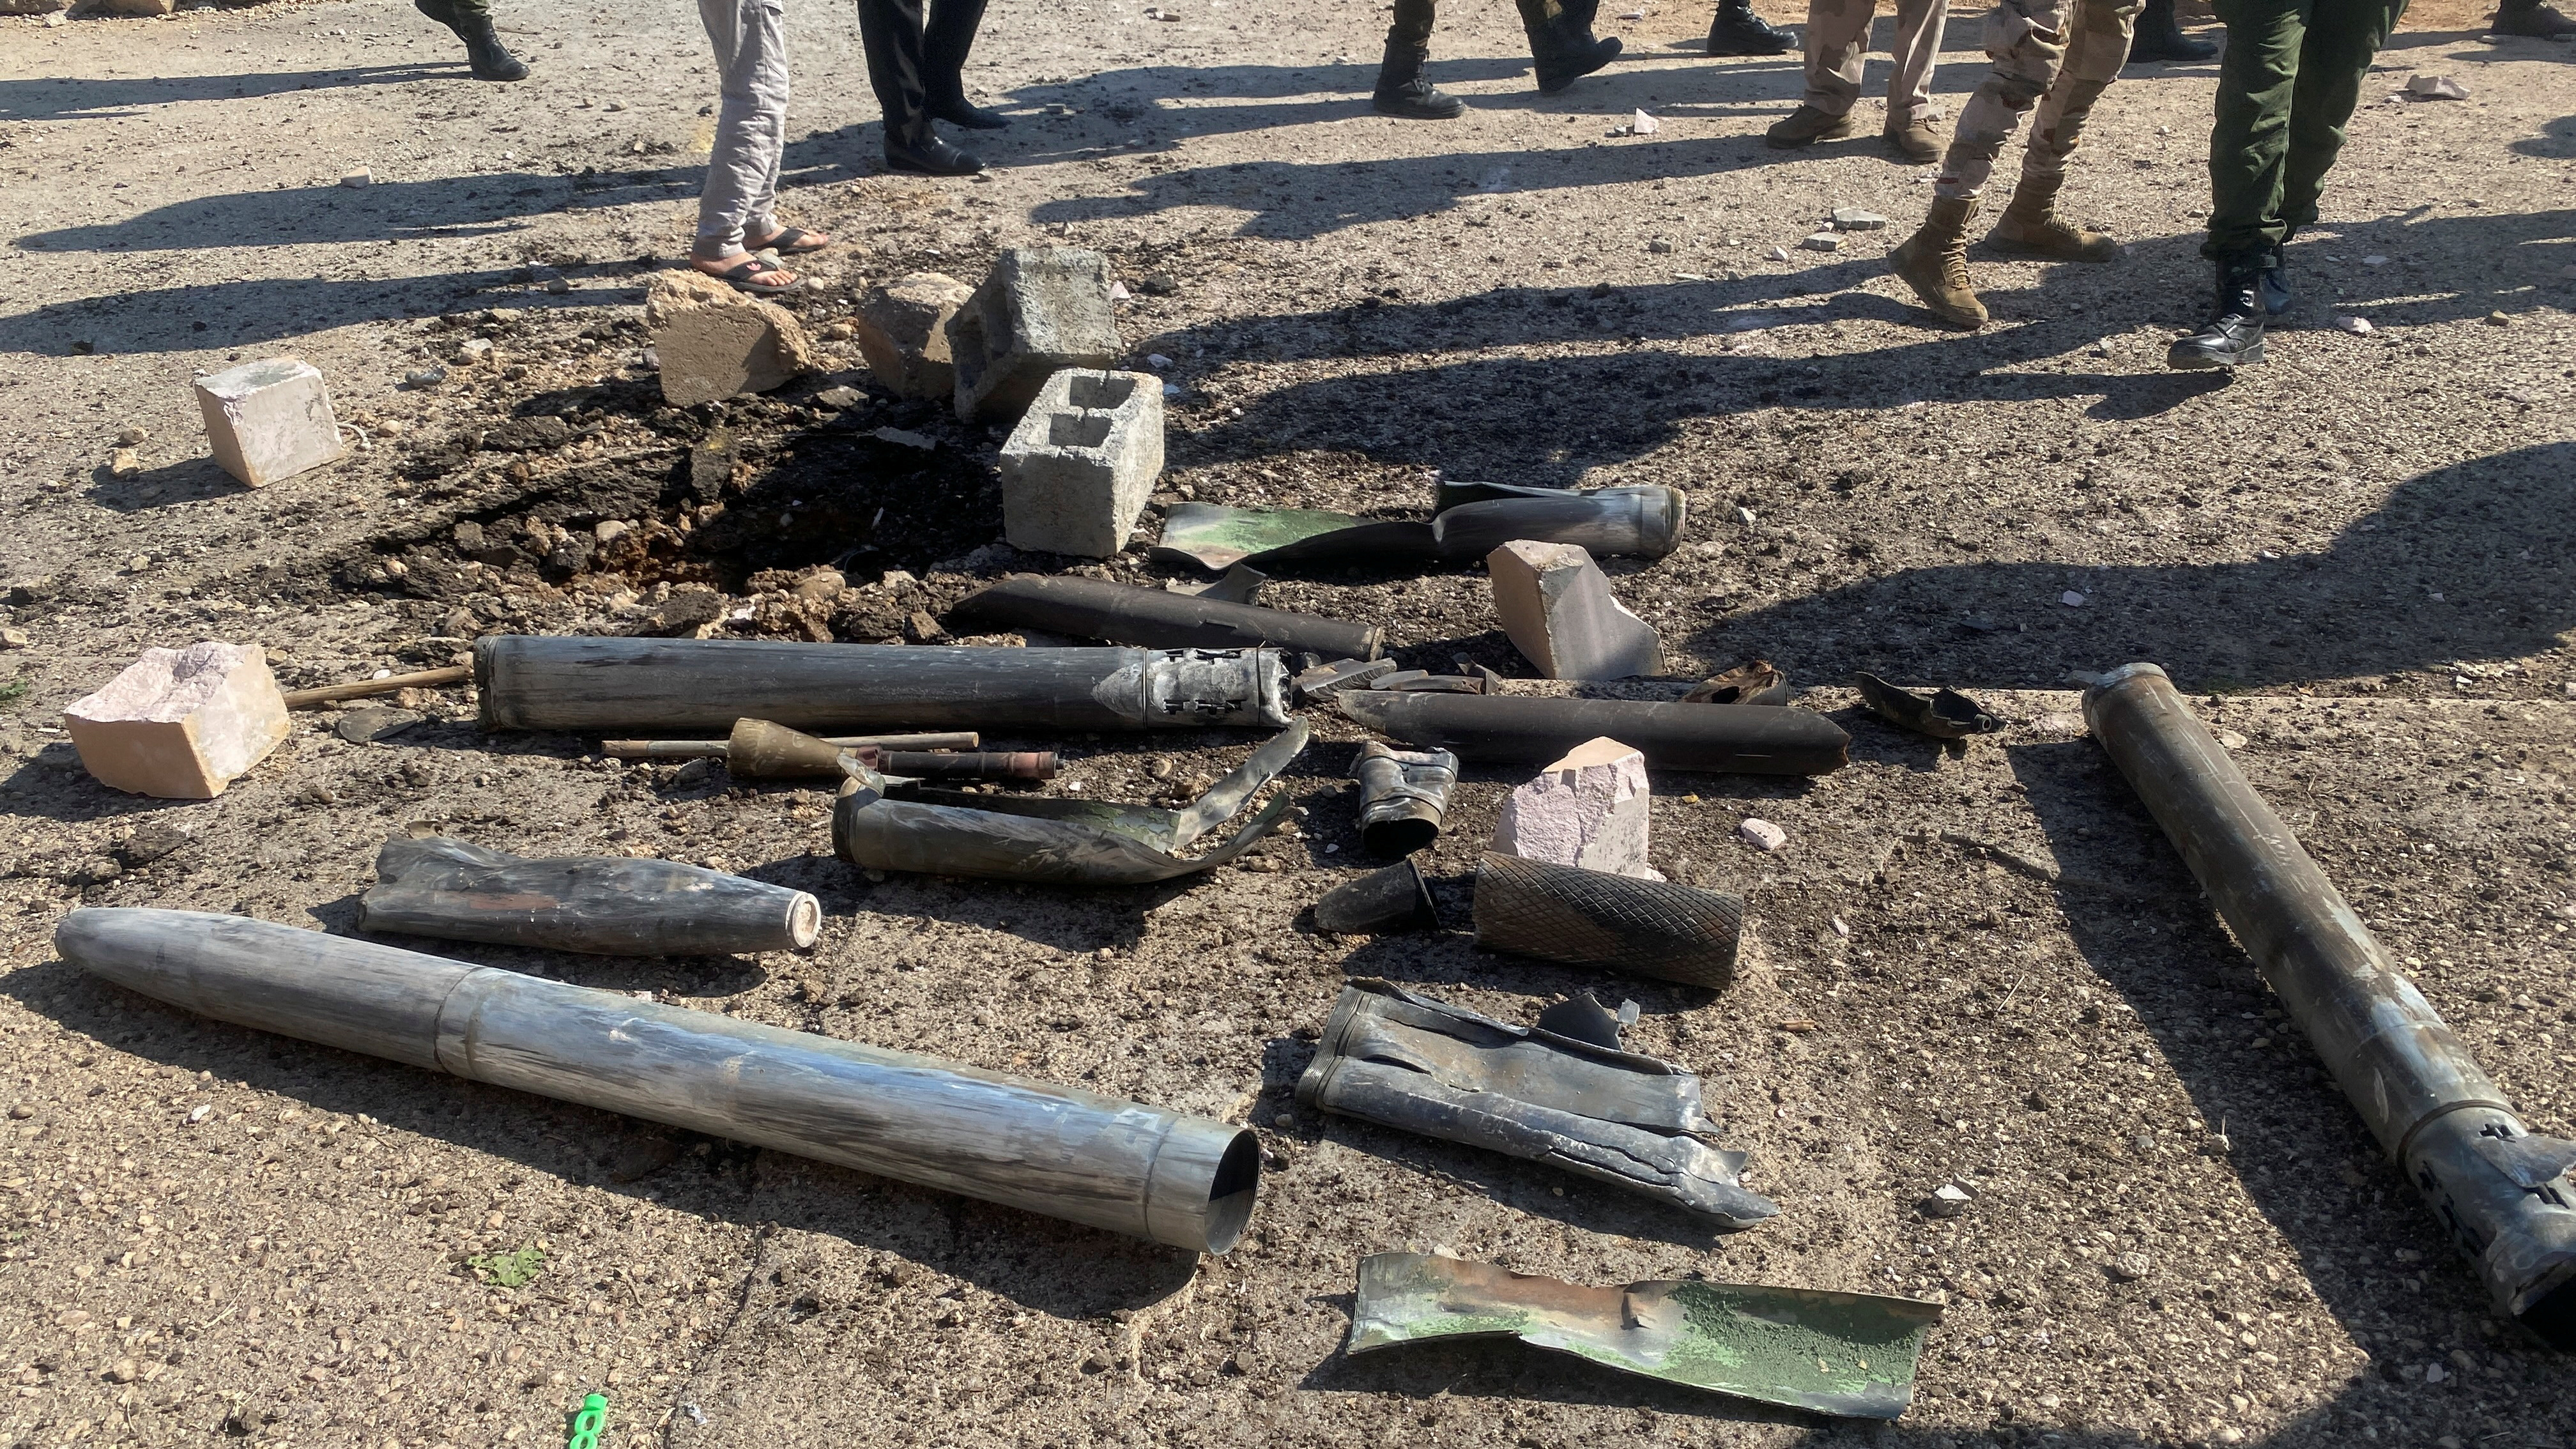 Shell casings lie at the site of a U.S. airstrike in al-Qaim